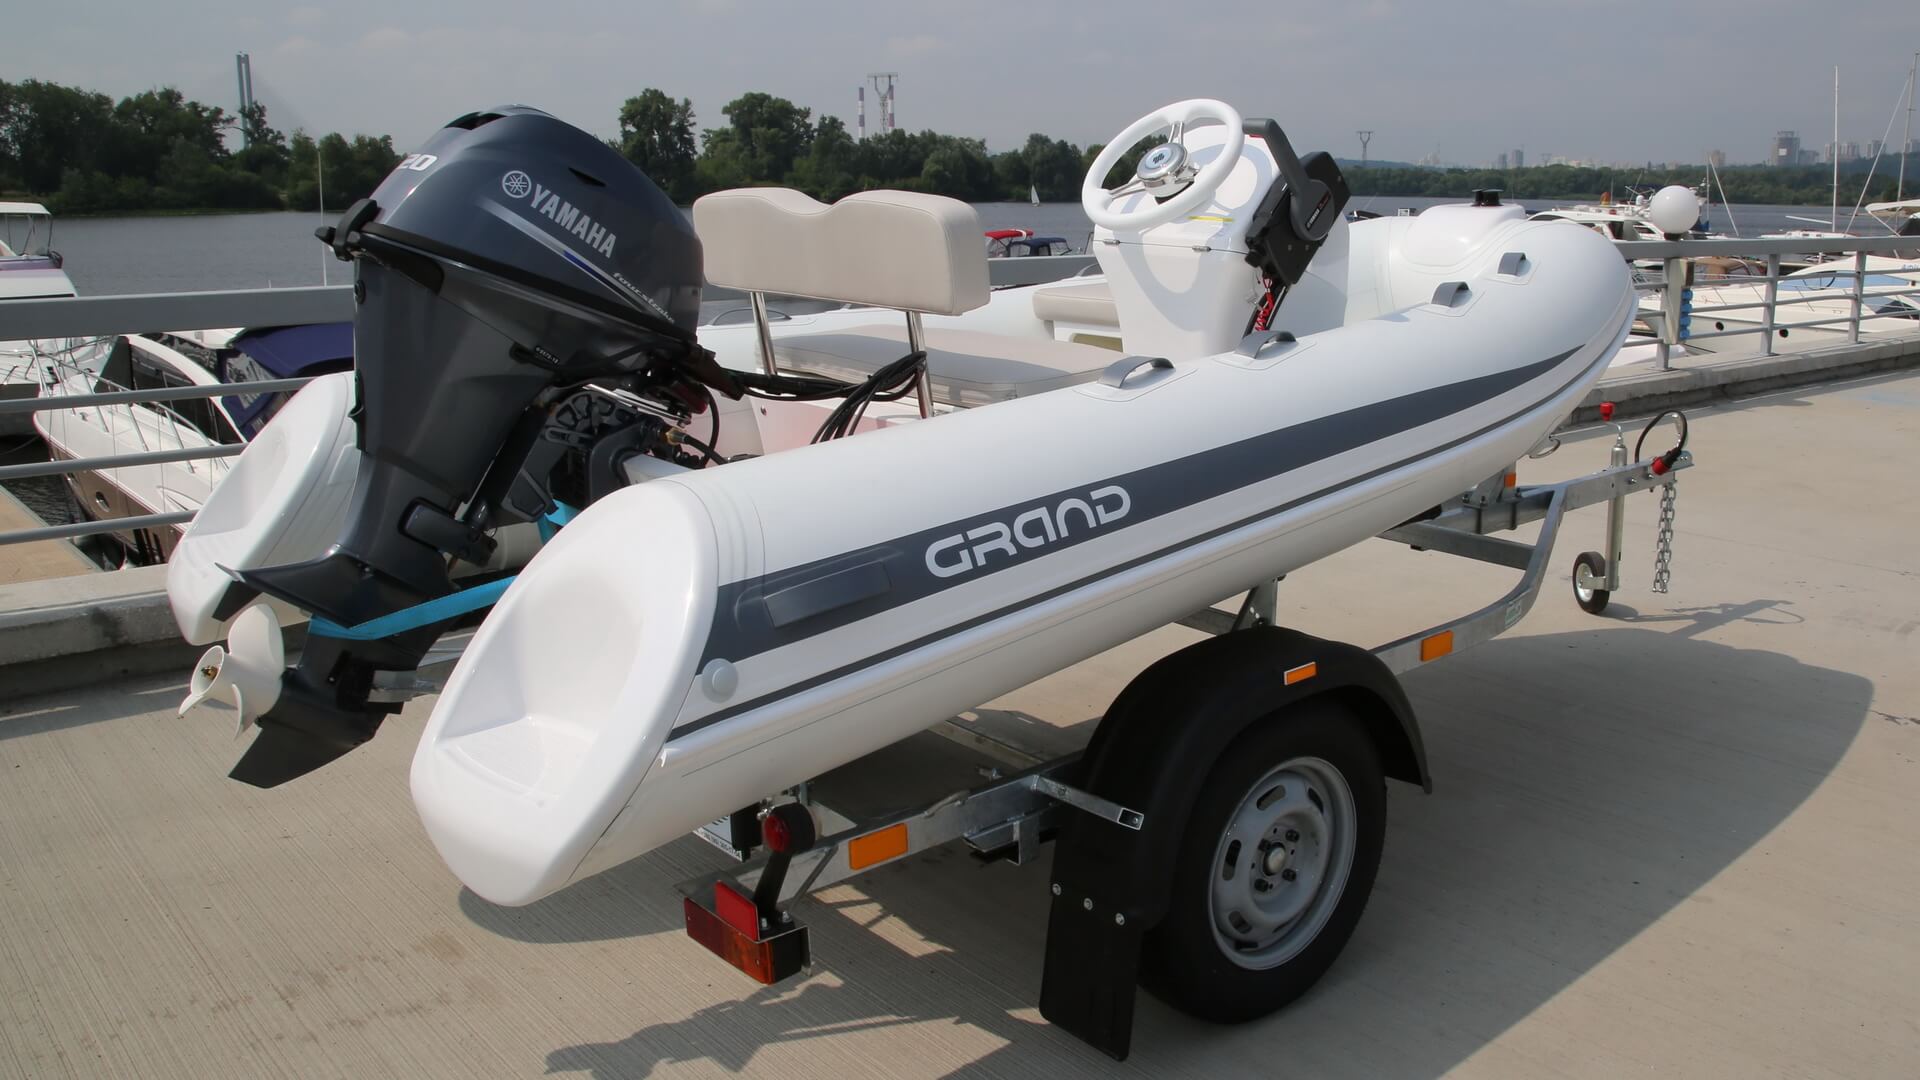 Надувная лодка с жестким дном GRAND Silver Line S300L, Надувная лодка GRAND Silver Line S300L, GRAND Silver Line S300L, GRAND Silver Line S300LF, GRAND S300L, GRAND S300LF, GRAND S300, Надувная лодка GRAND, Надувная лодка ГРАНД, Надувная лодка с жестким дном, RIB, Rigid Inflatable Boats